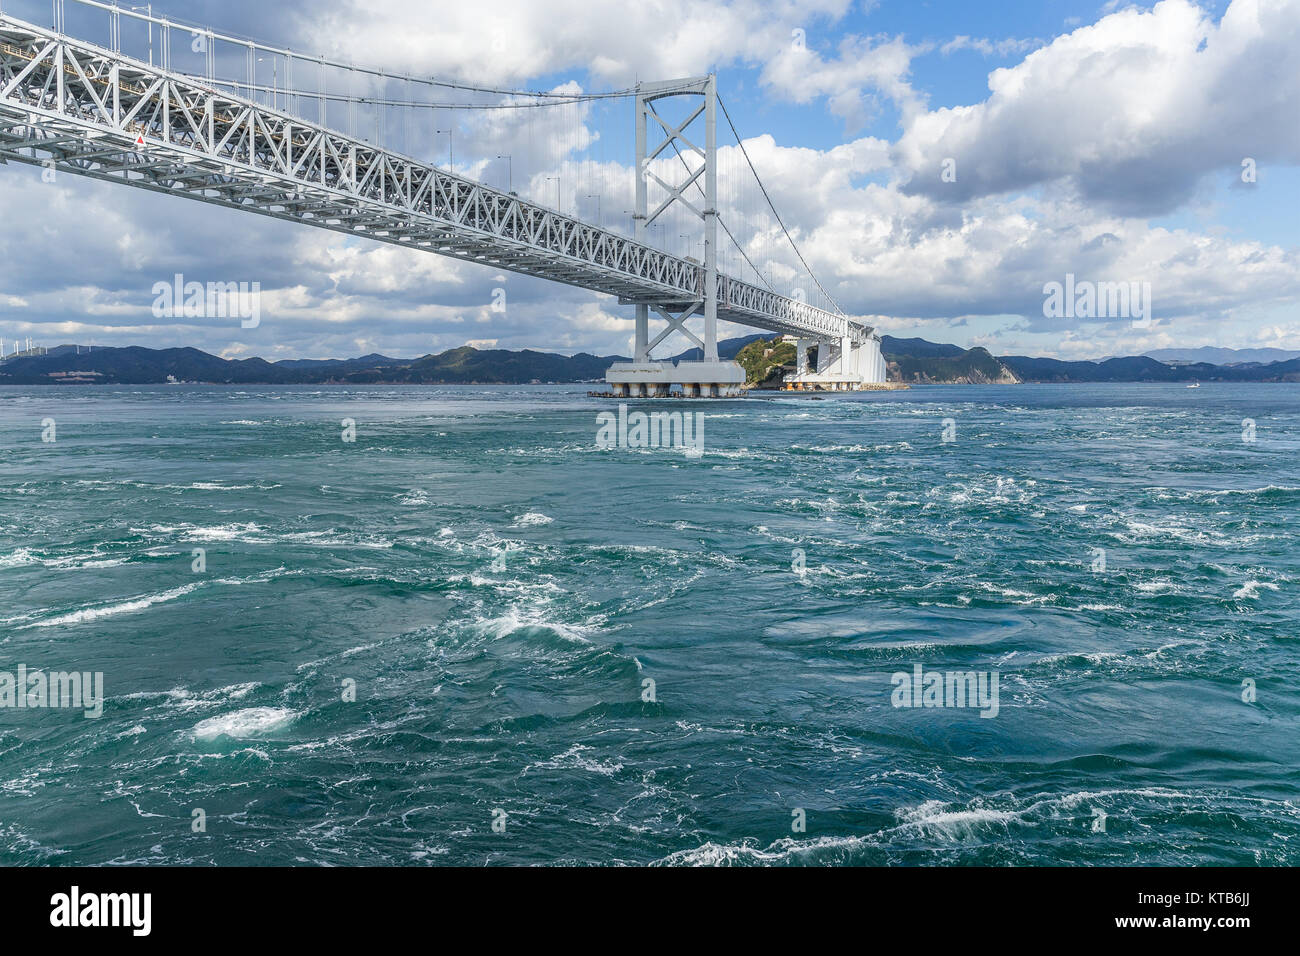 Onaruto Bridge and Whirlpool in Japan Stock Photo